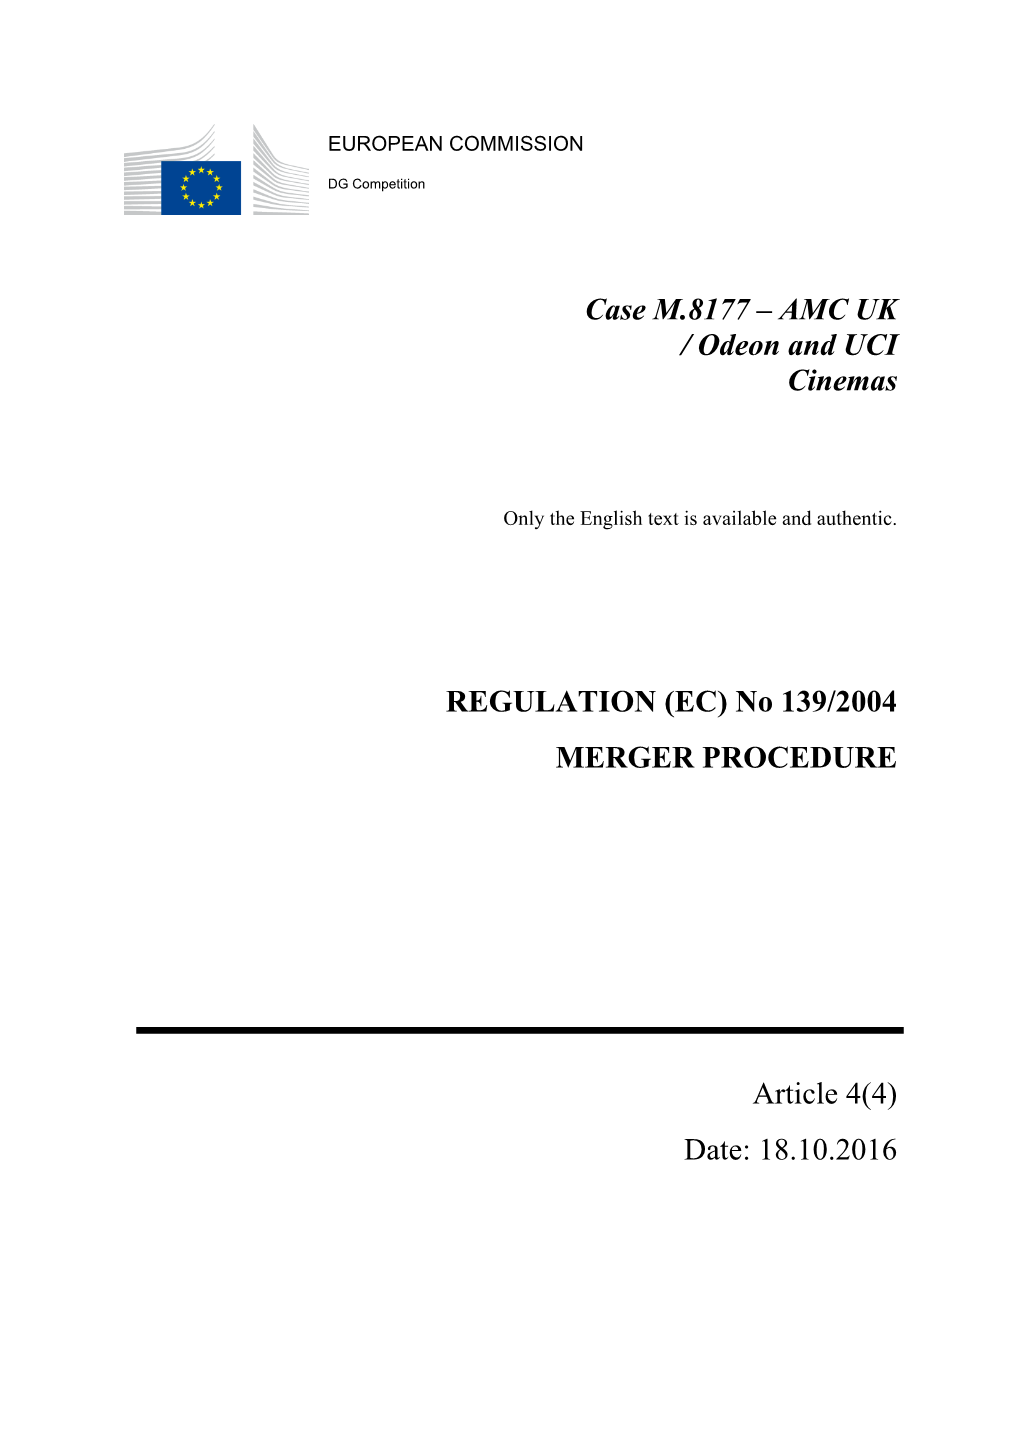 Case M.8177 – AMC UK / Odeon and UCI Cinemas